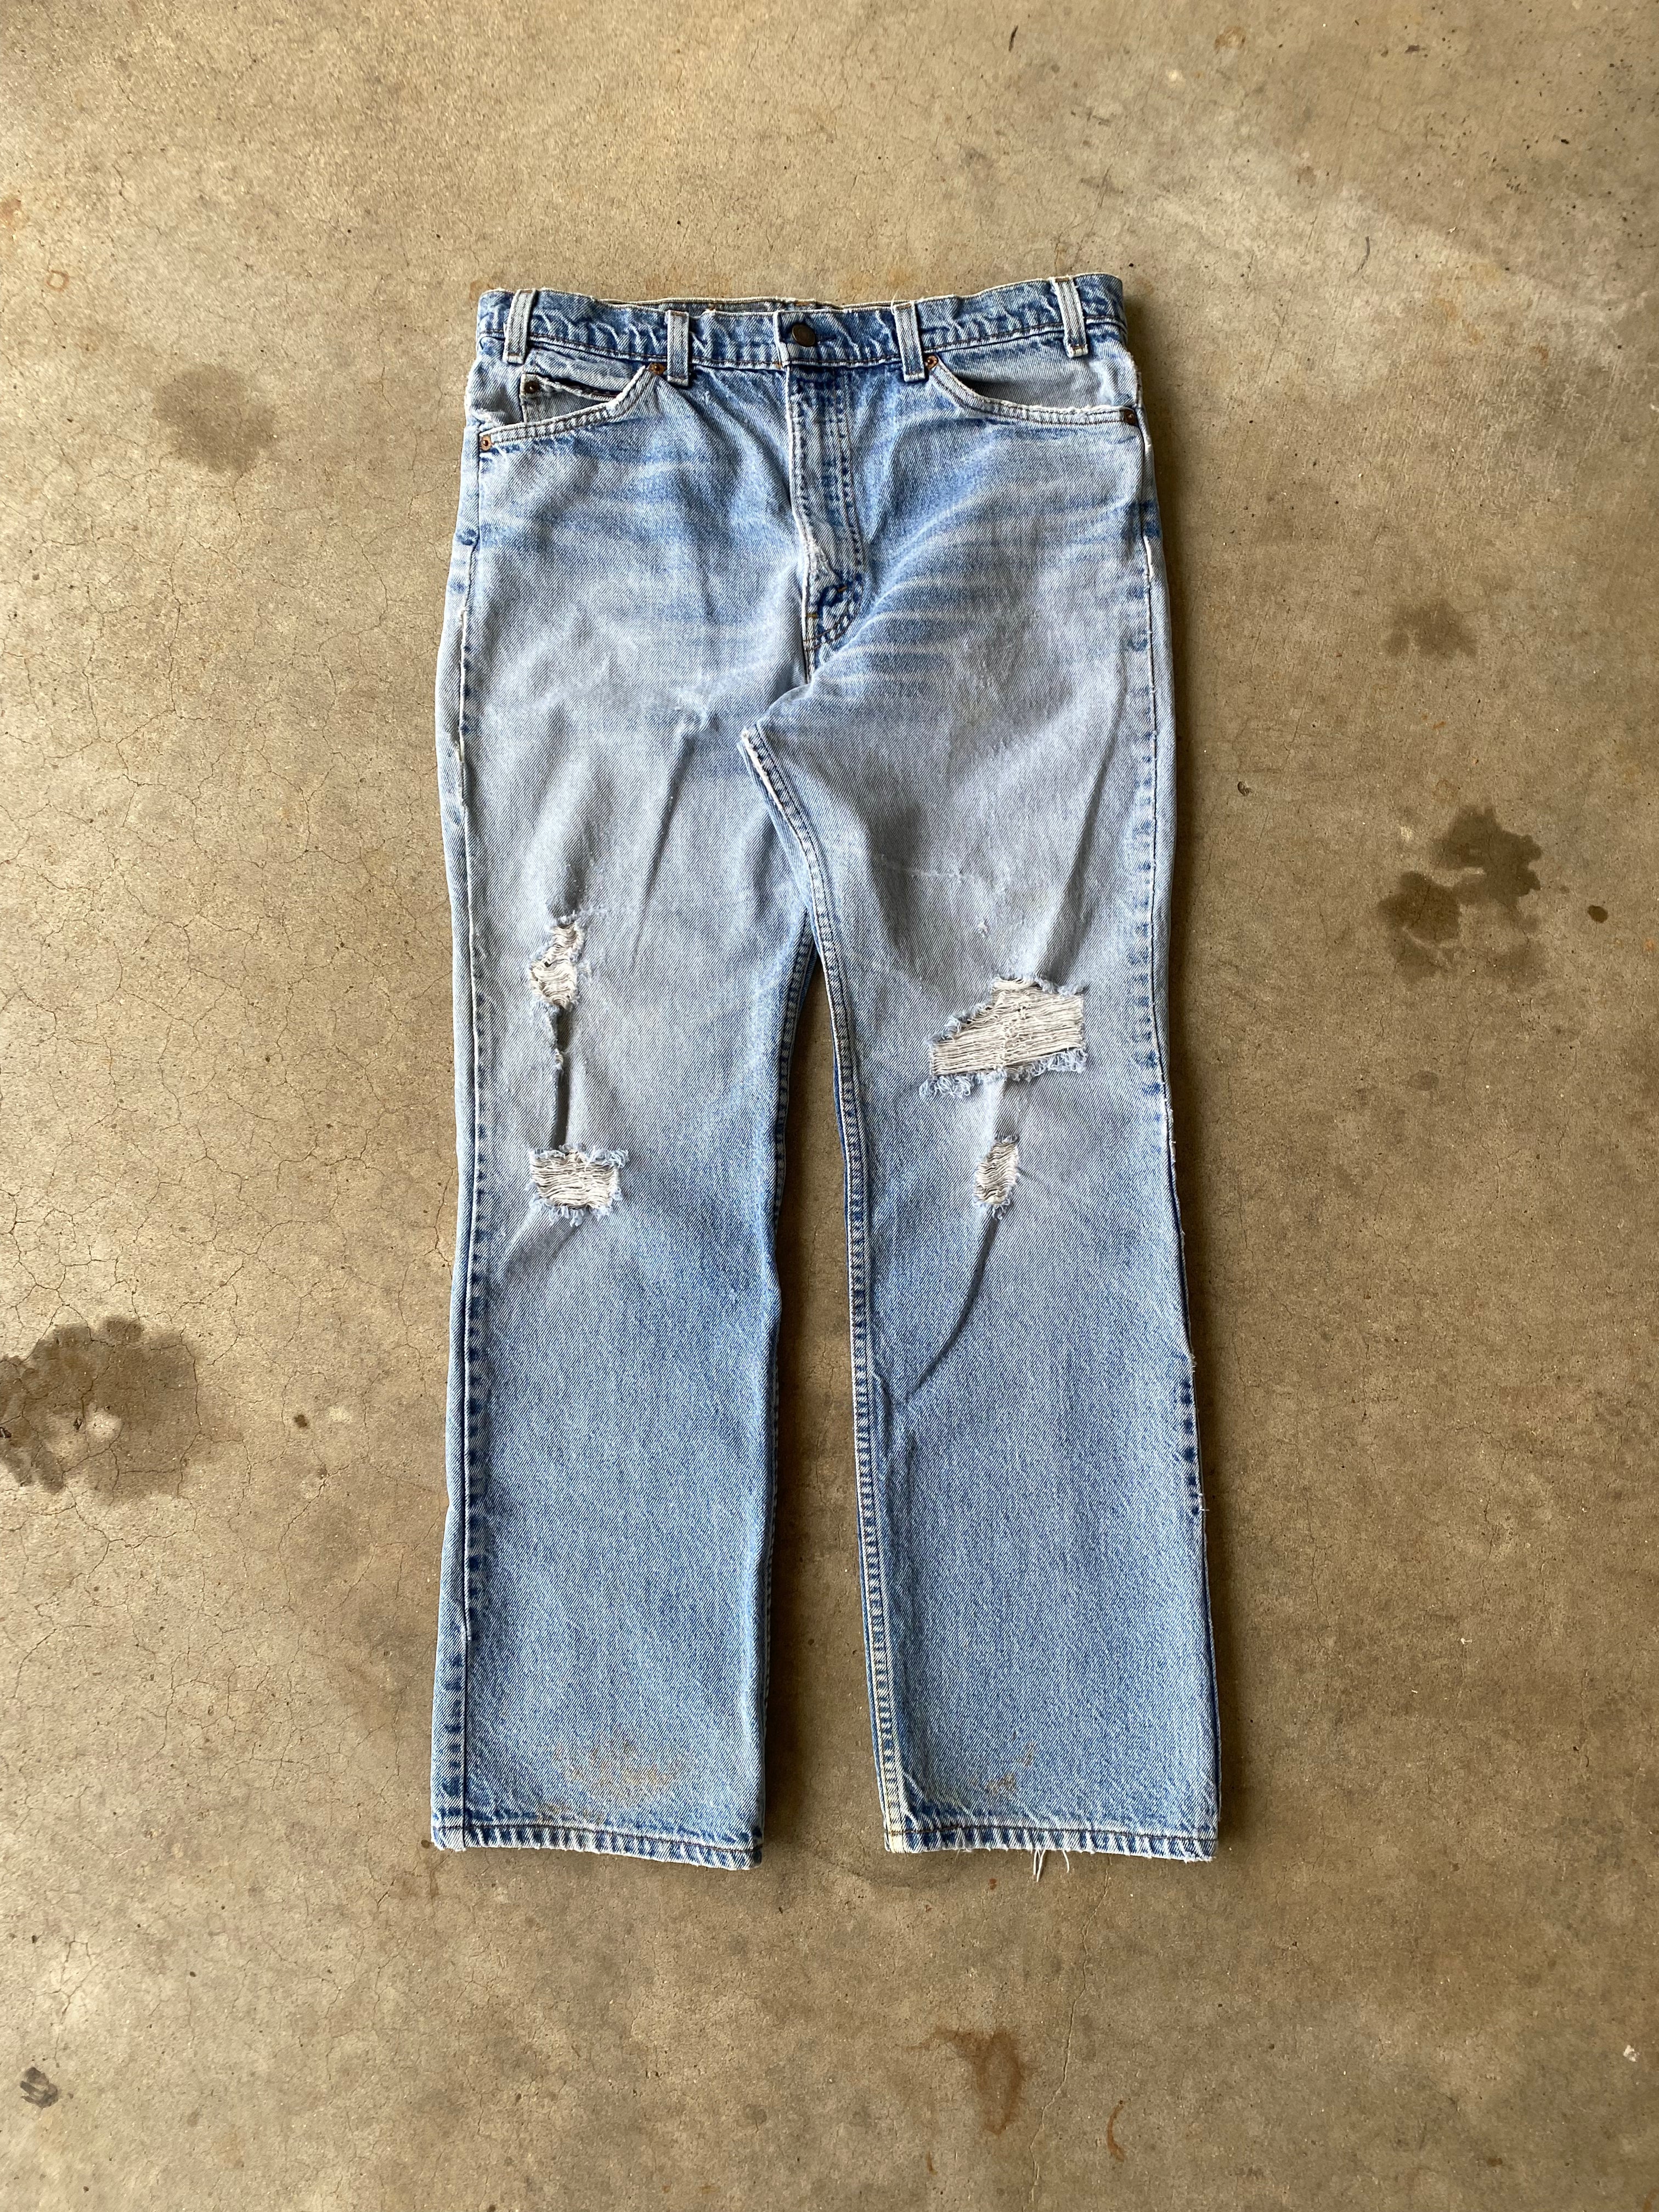 1990s Distressed Levi’s 517 Orange Tab Flare Jeans (34"x29.5")